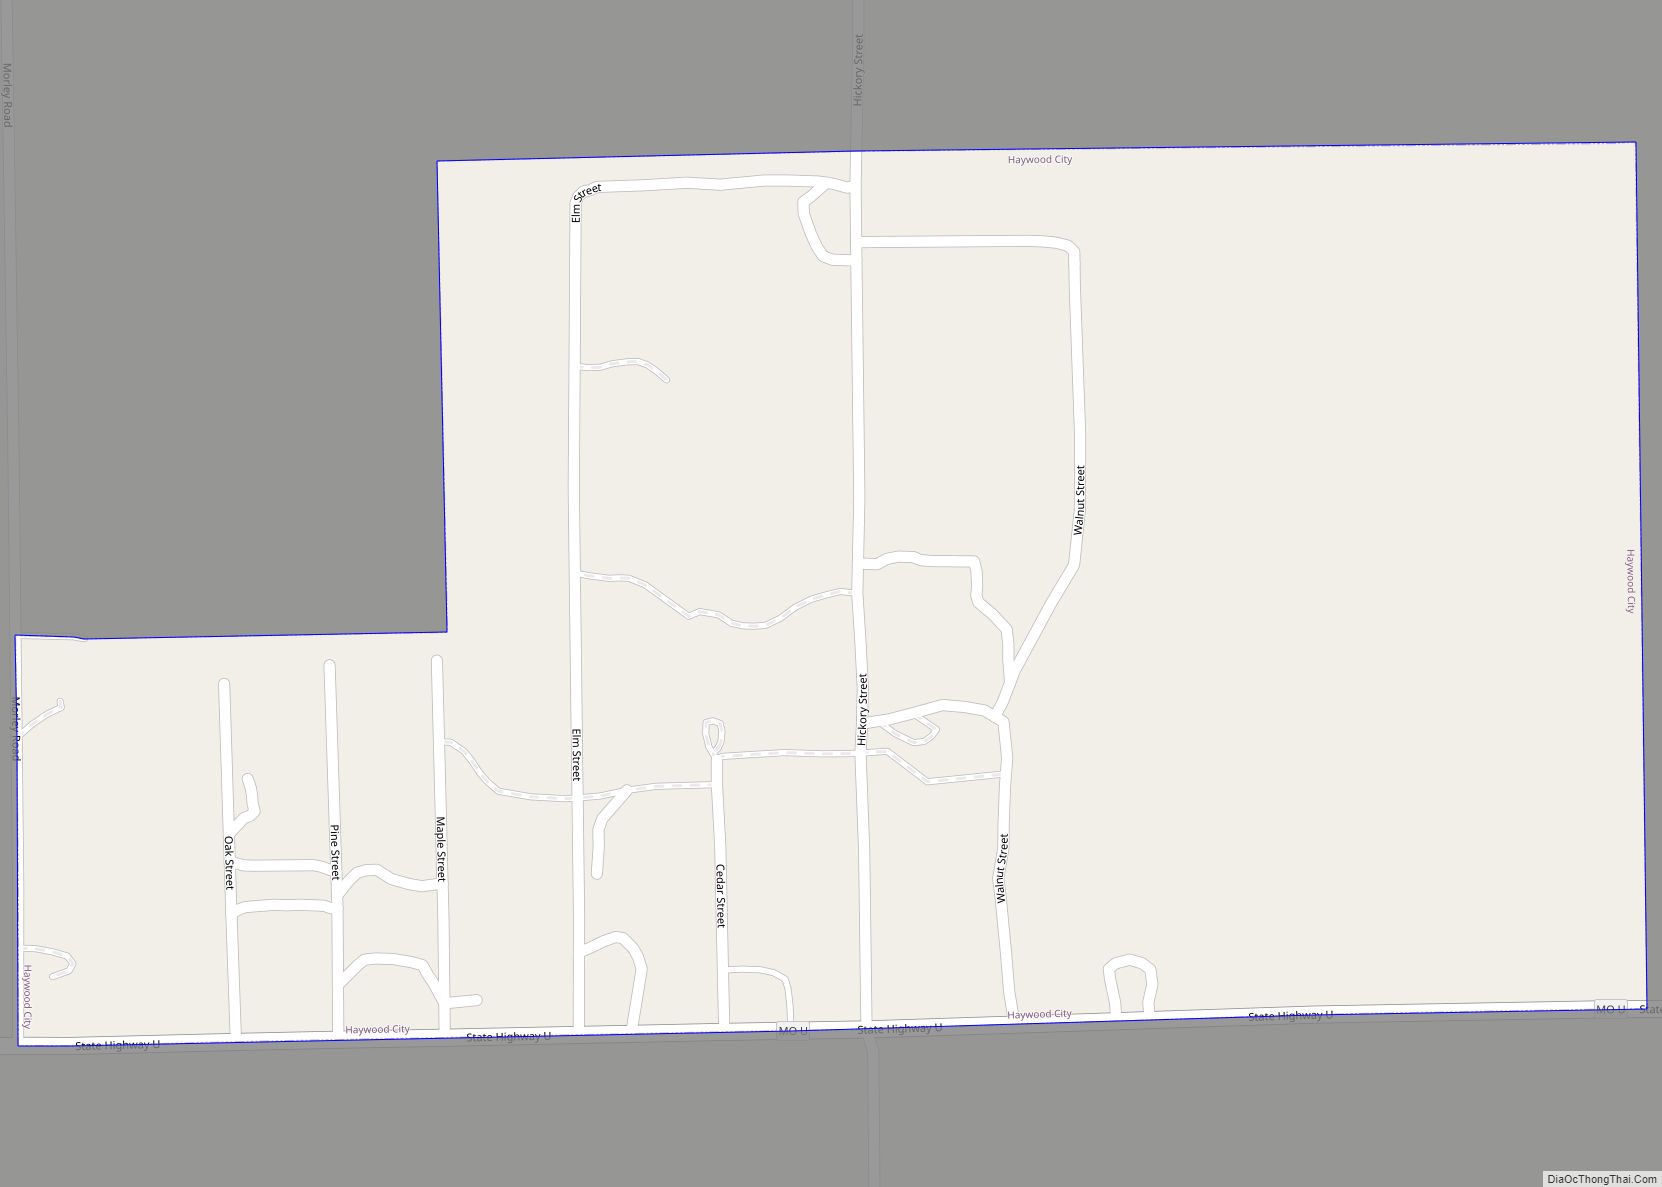 Map of Haywood City village